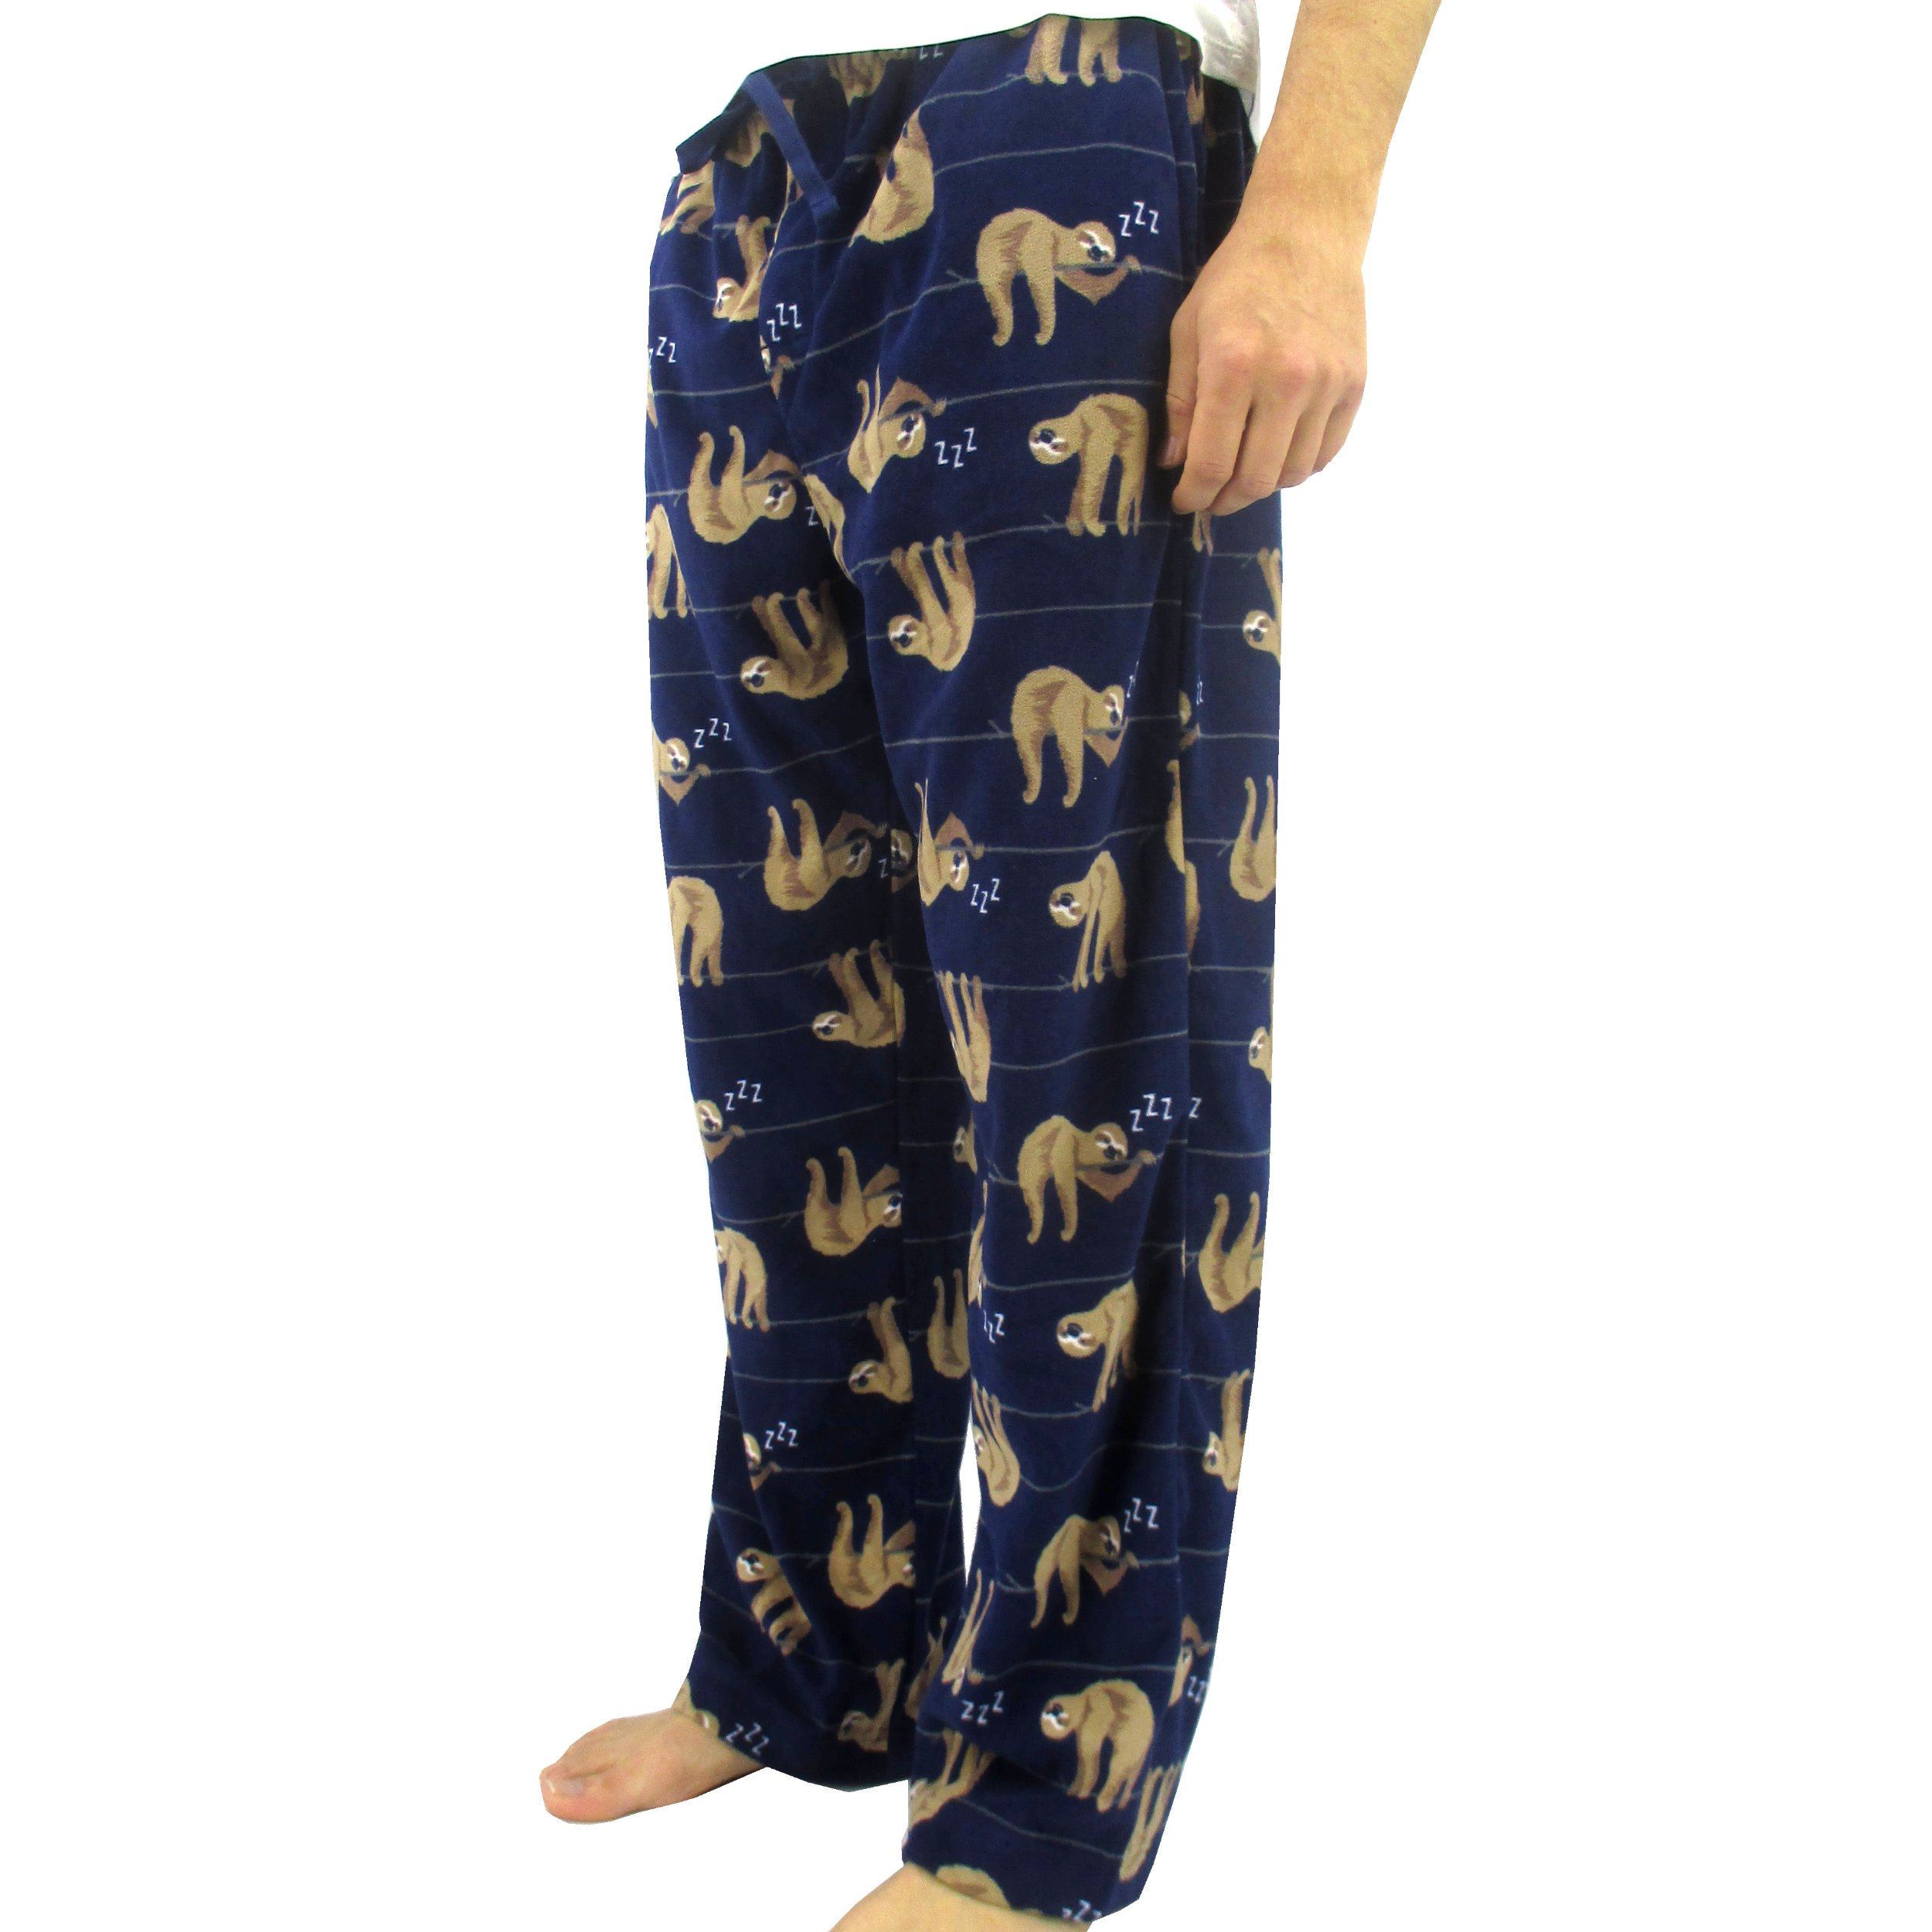 Men's Super Soft Cozy Fleece Pajama Bottoms with Sleeping Sloth Print